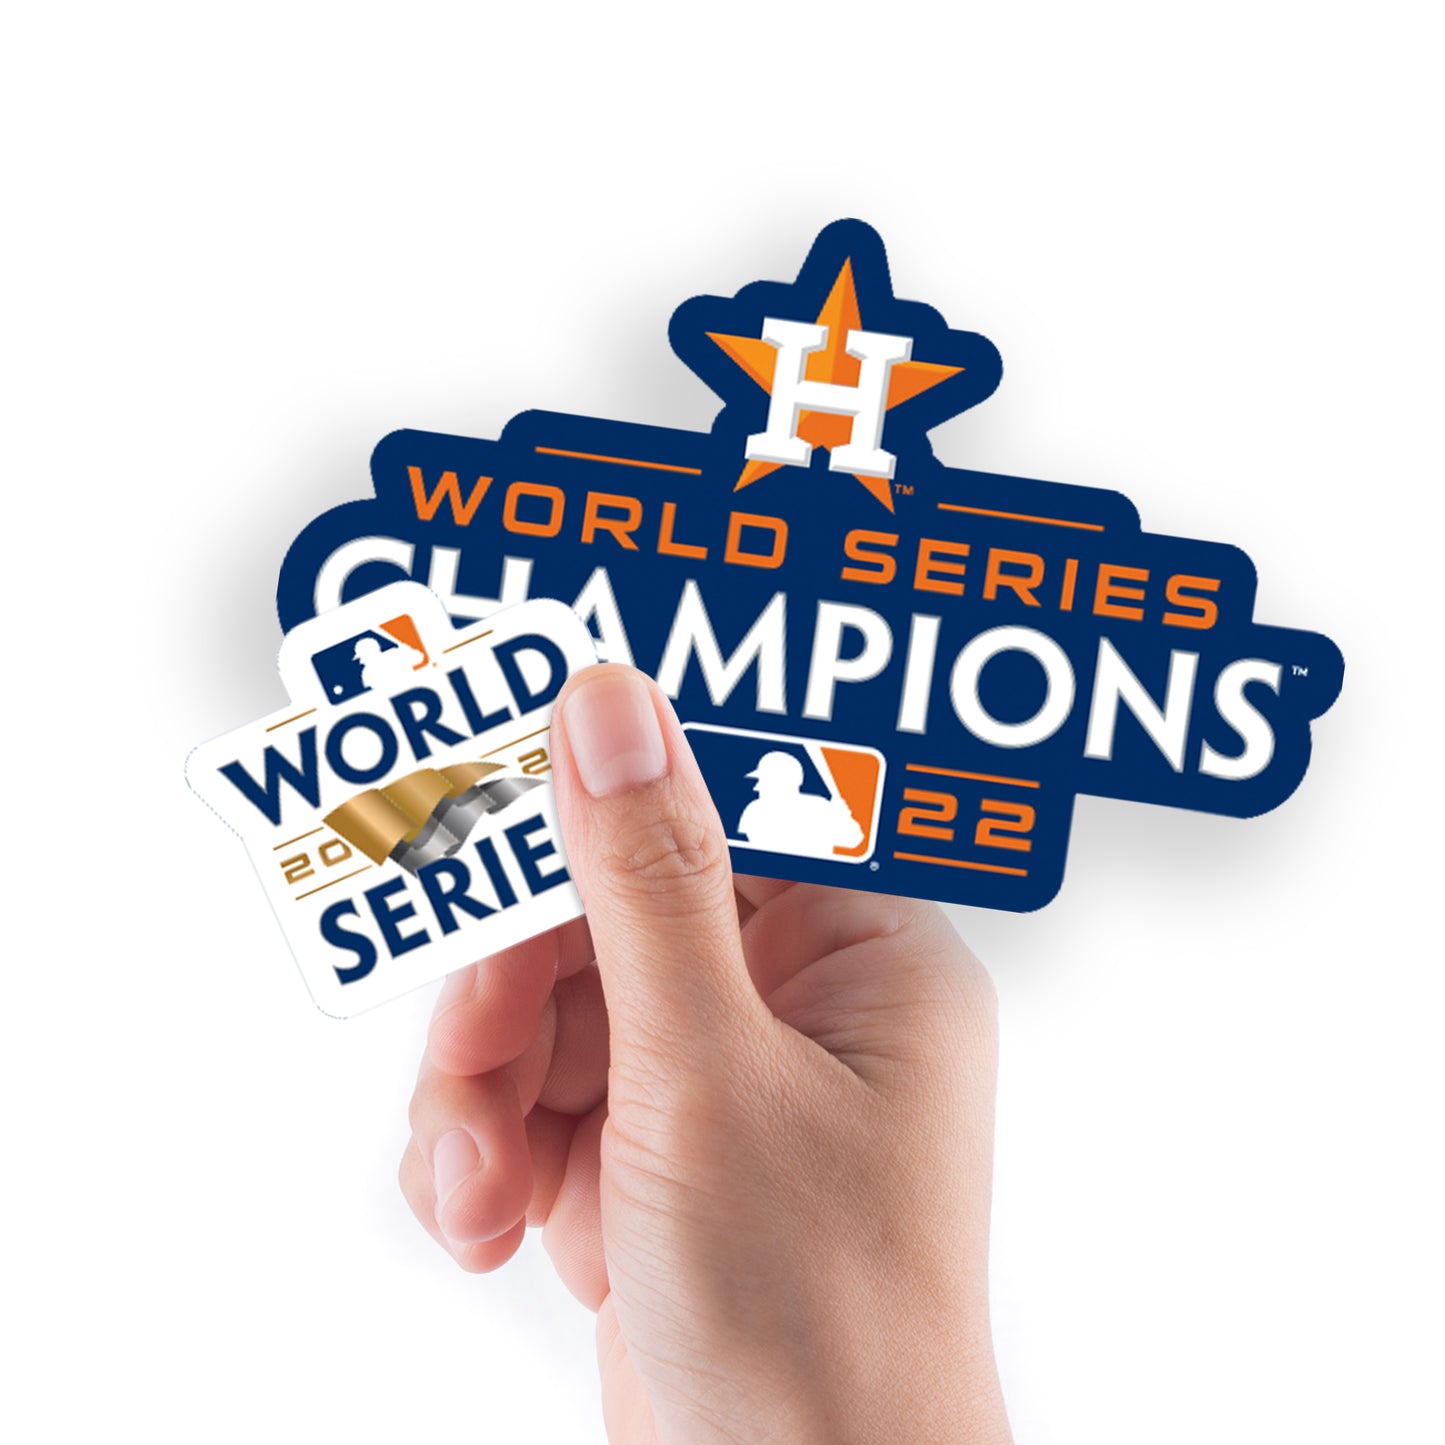 Go Astros 2022 World Series Champions Houston Astros 2017,2022